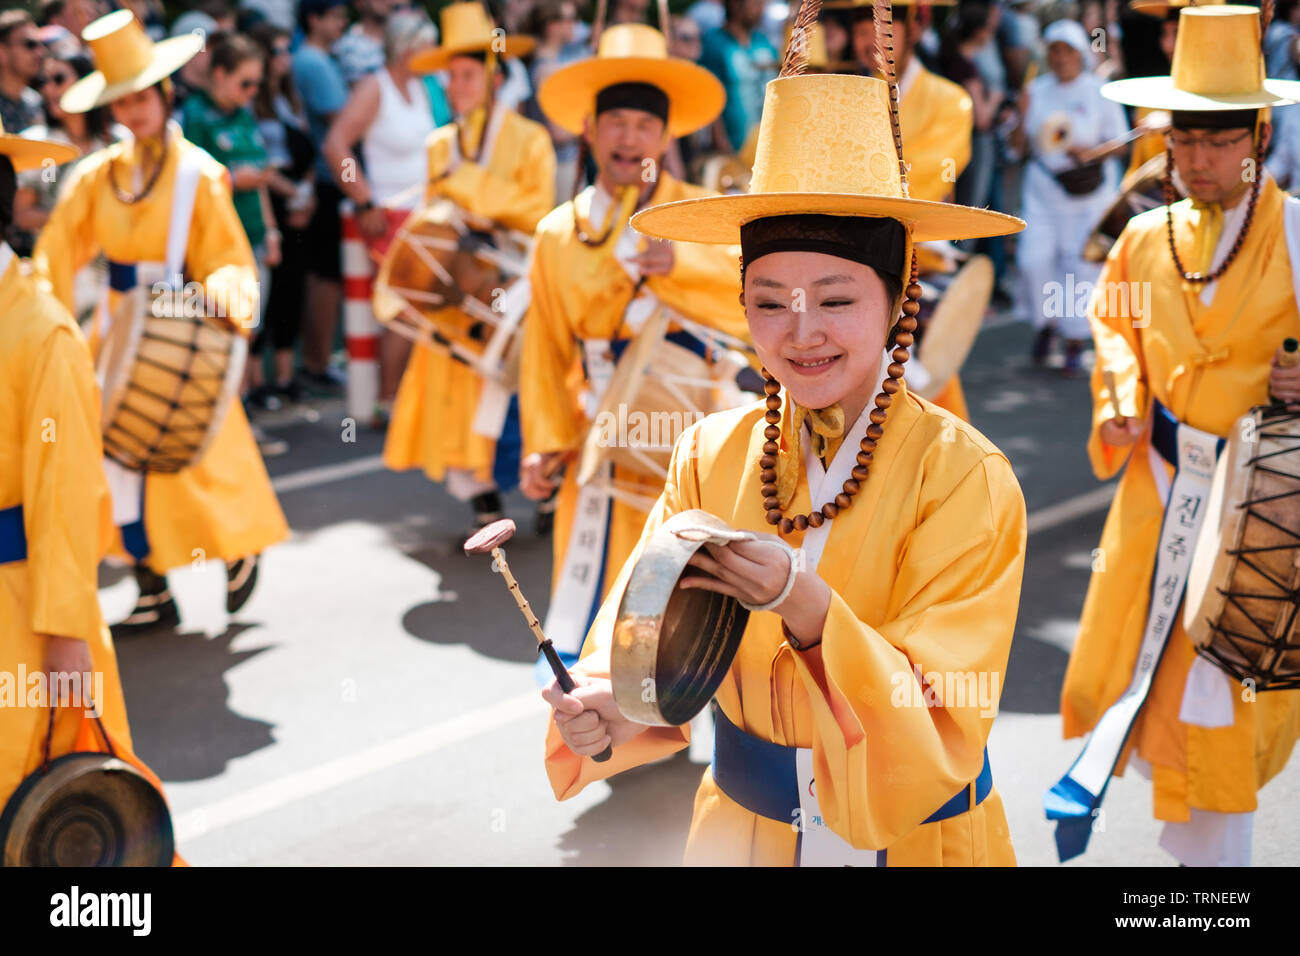 Berlin, Germany - june 2019: Korean people in traditional costumes performing at Karneval der Kulturen (Carnival of Cultures) in Berlin Stock Photo